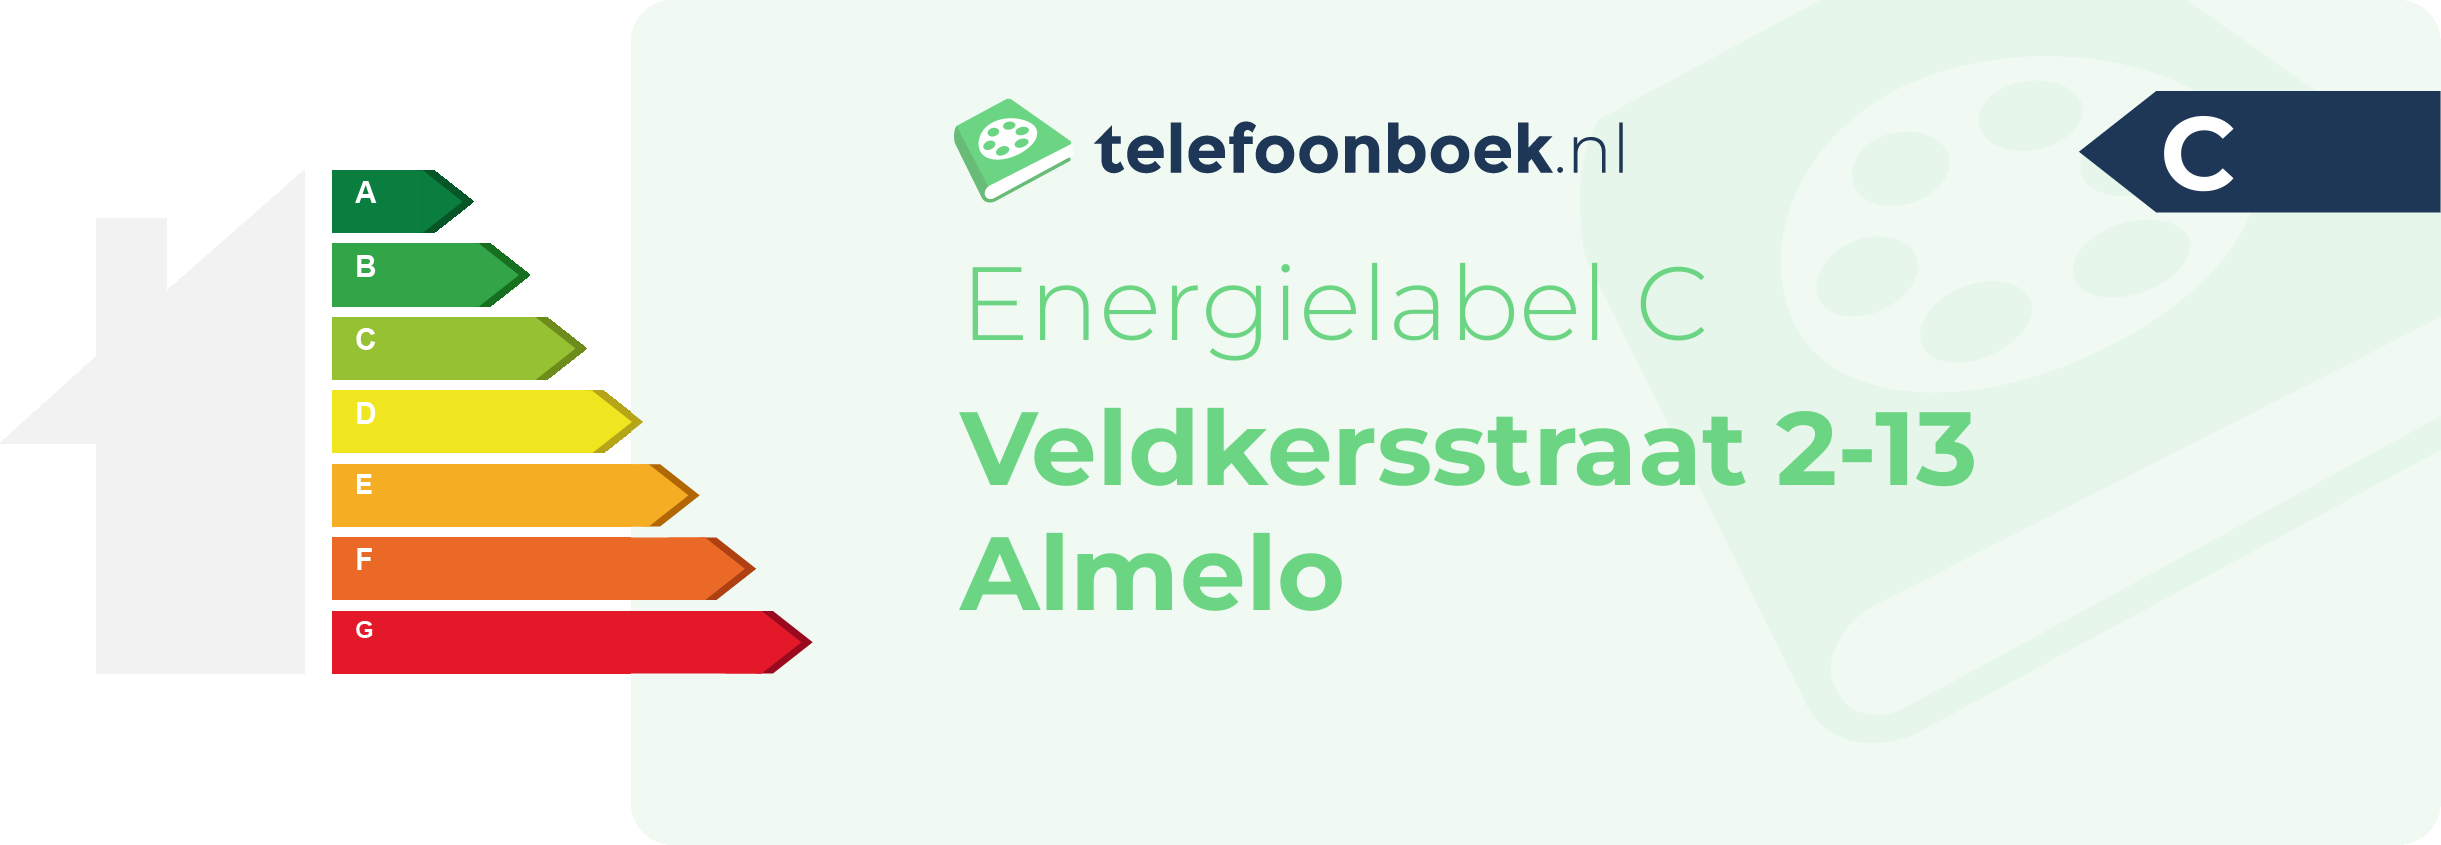 Energielabel Veldkersstraat 2-13 Almelo